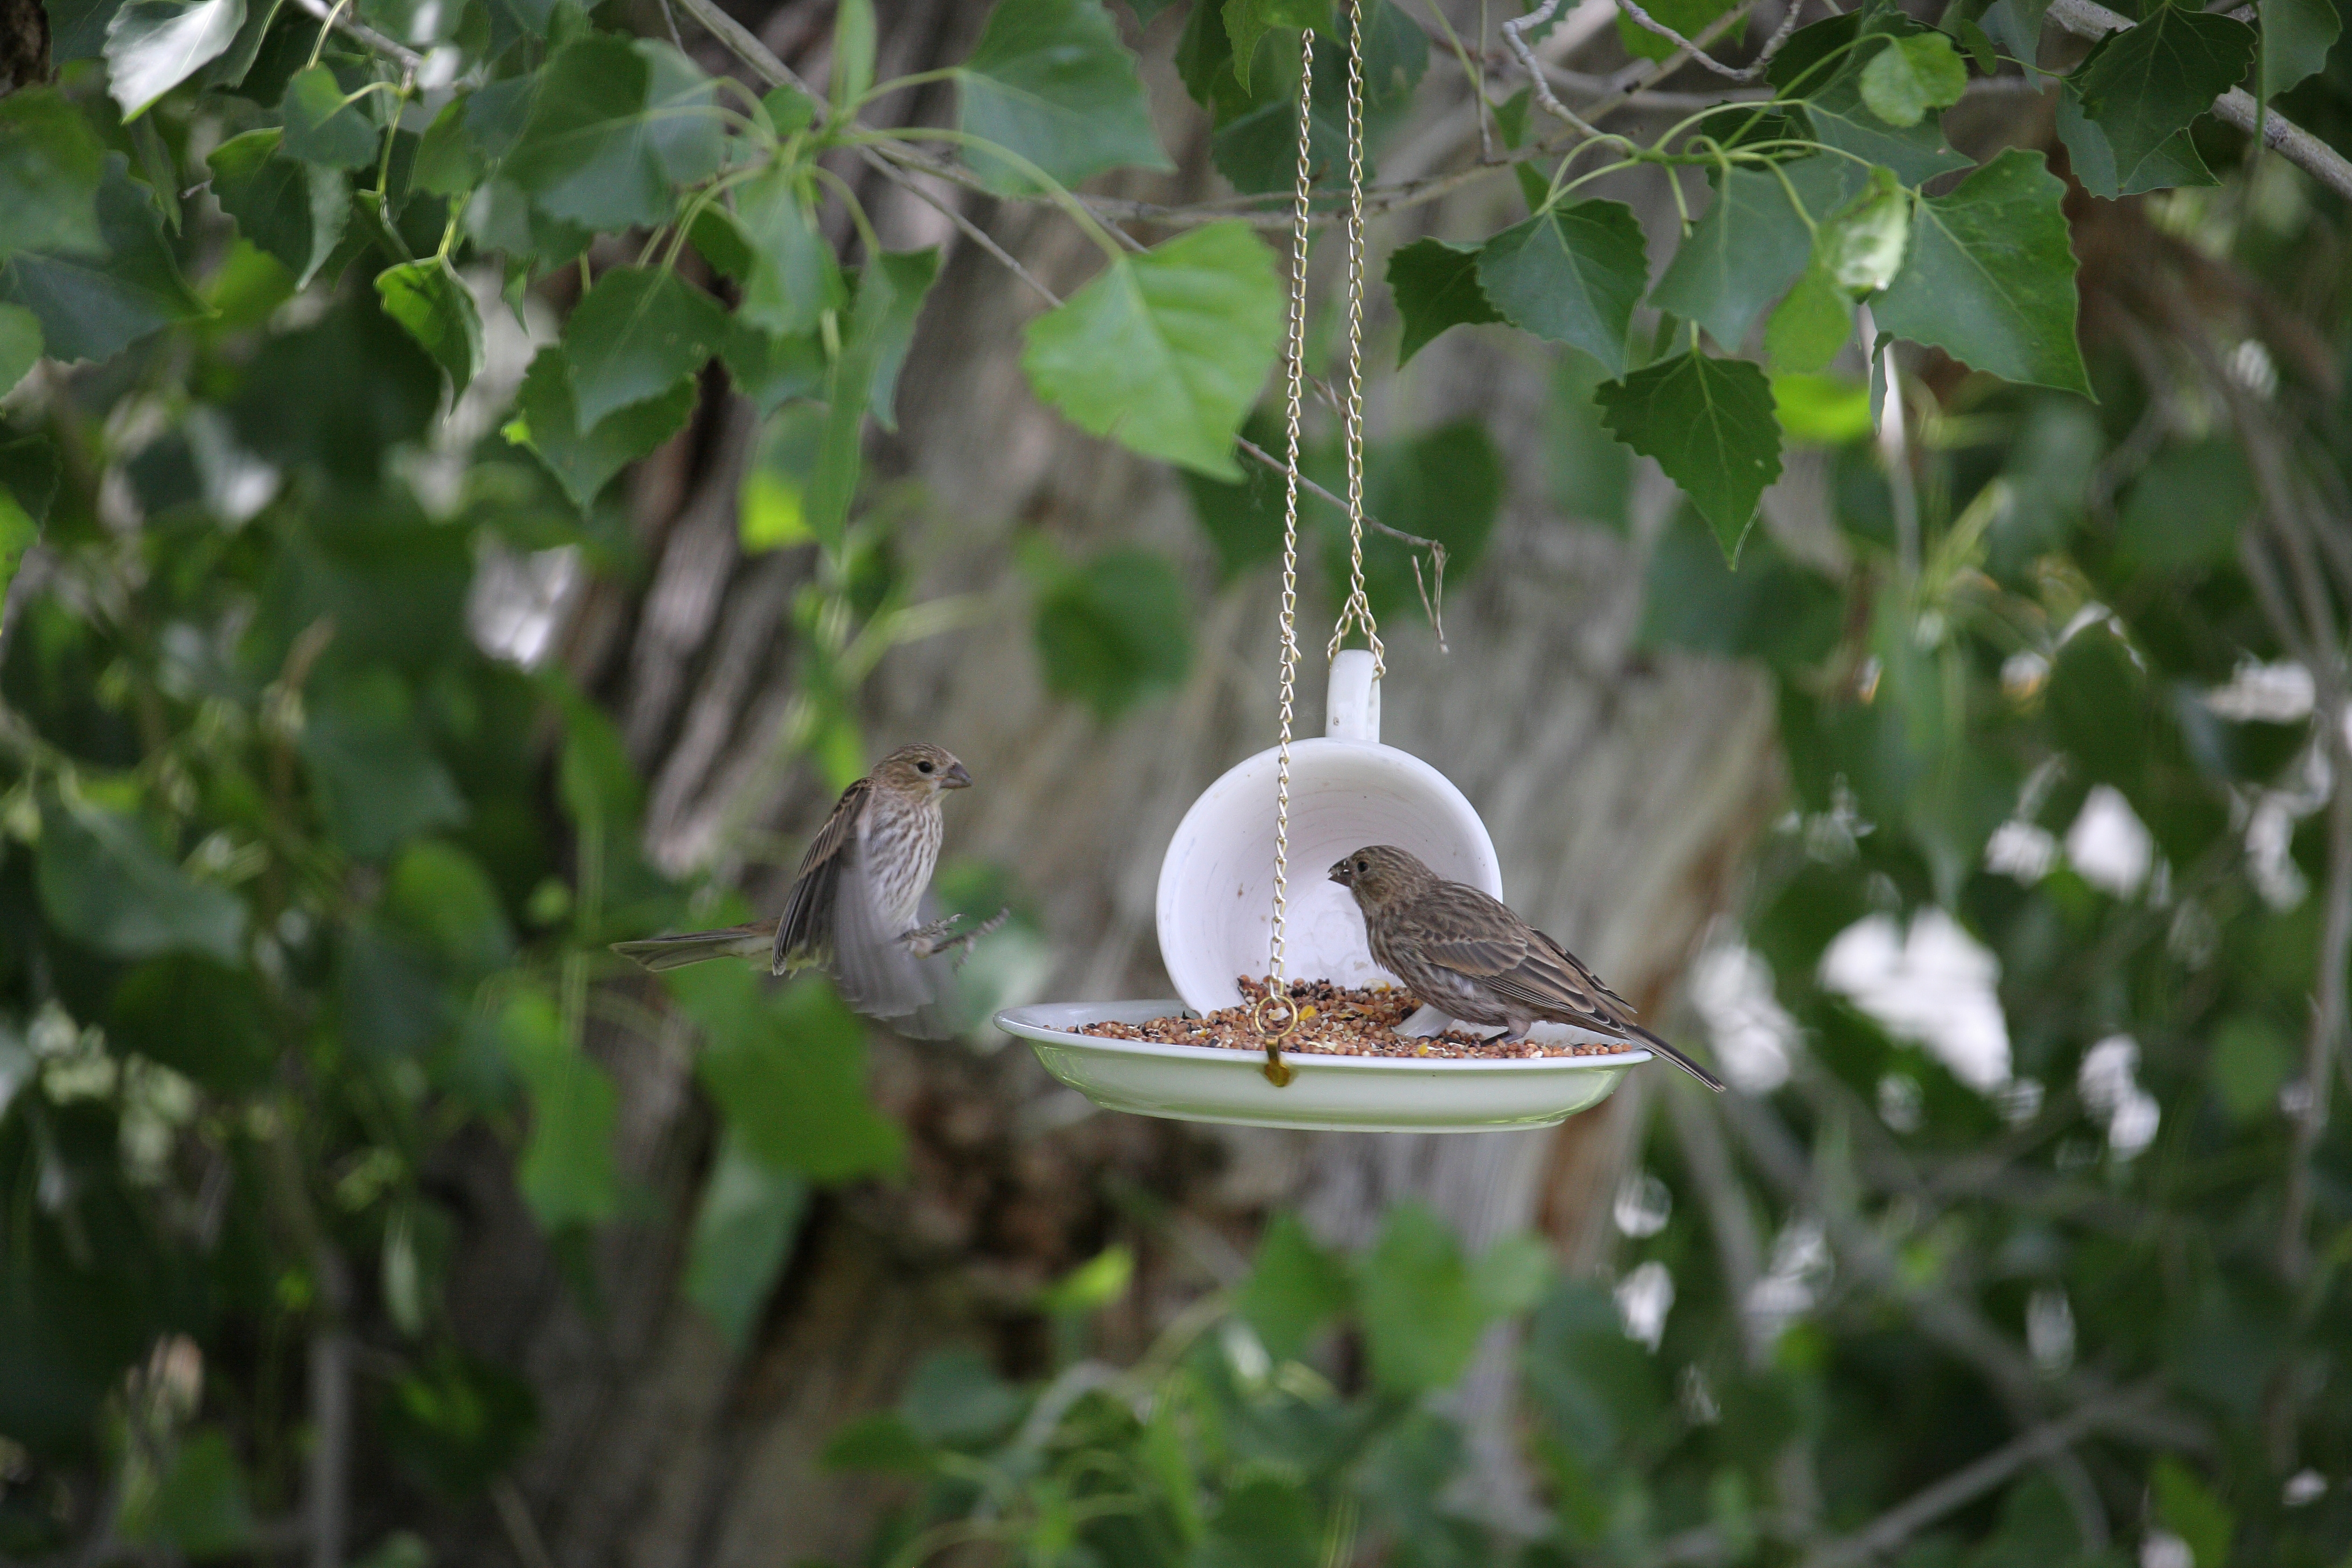 teacup and saucer bird feeder with birds